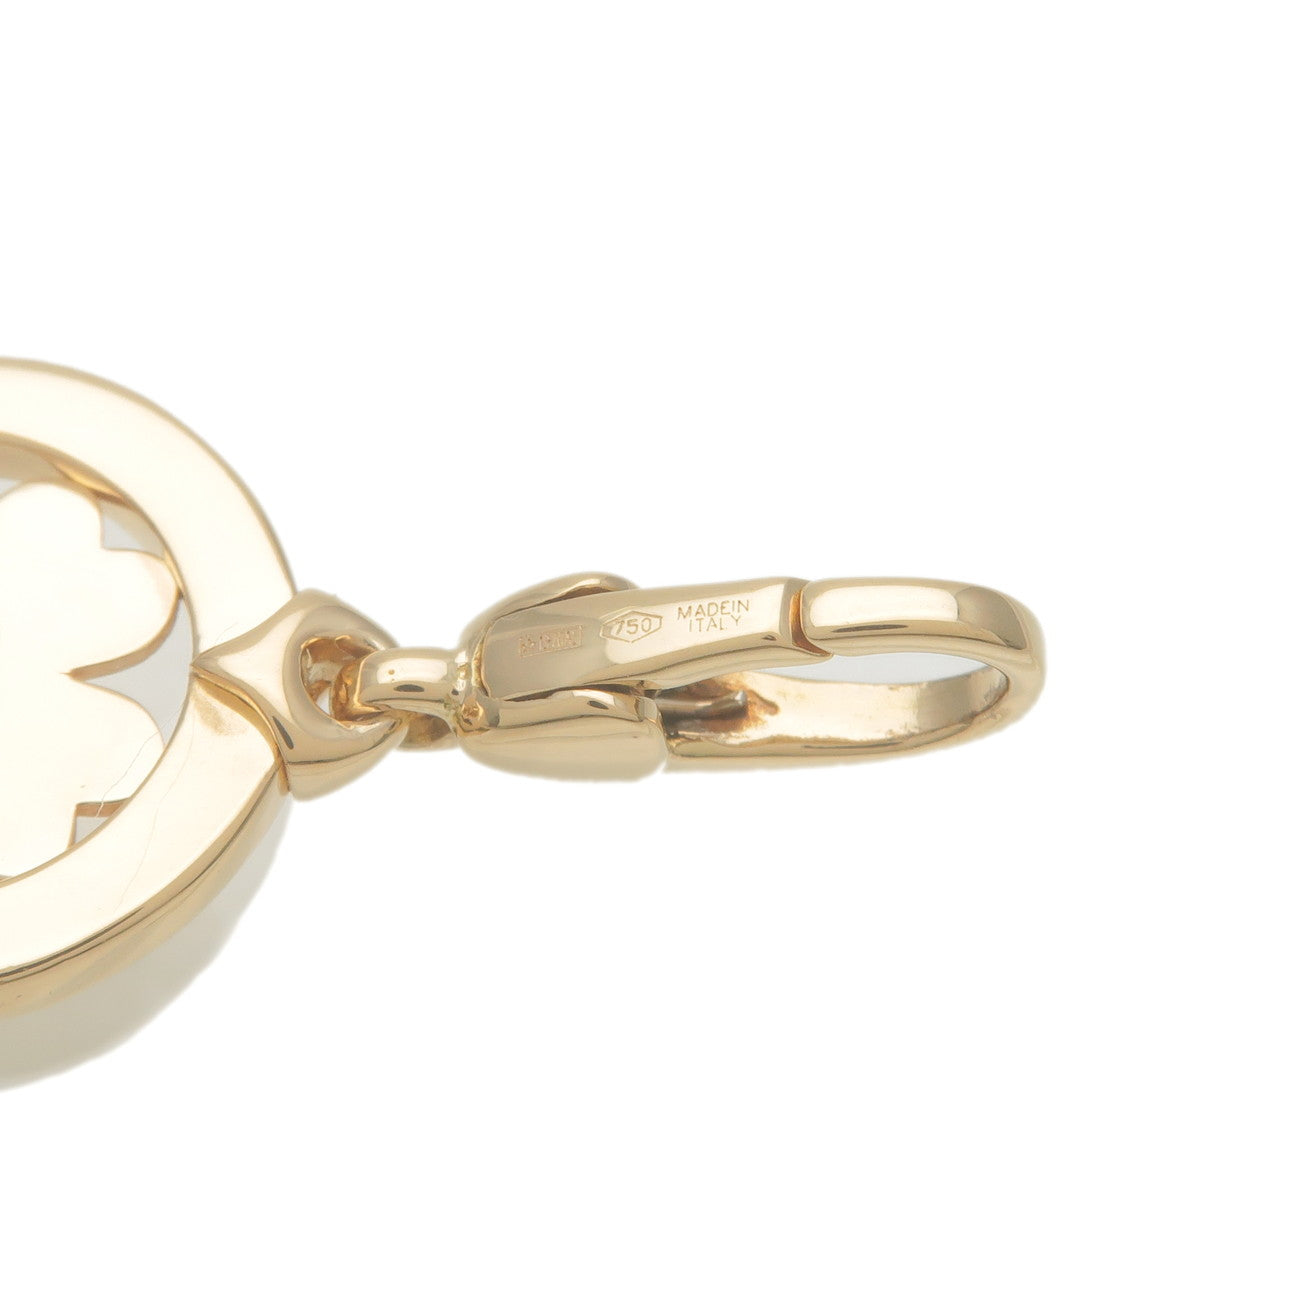 BVLGARI Tondo Clover Charm Pendant Necklace Top K18 Yellow Gold